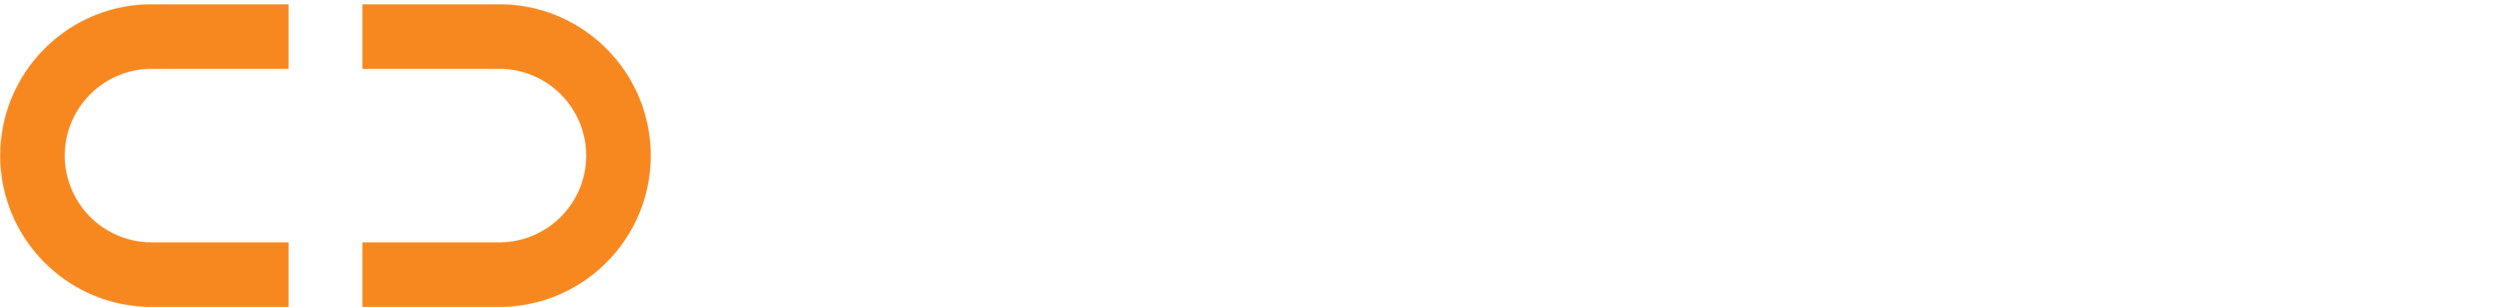 Core-Rx Communications 